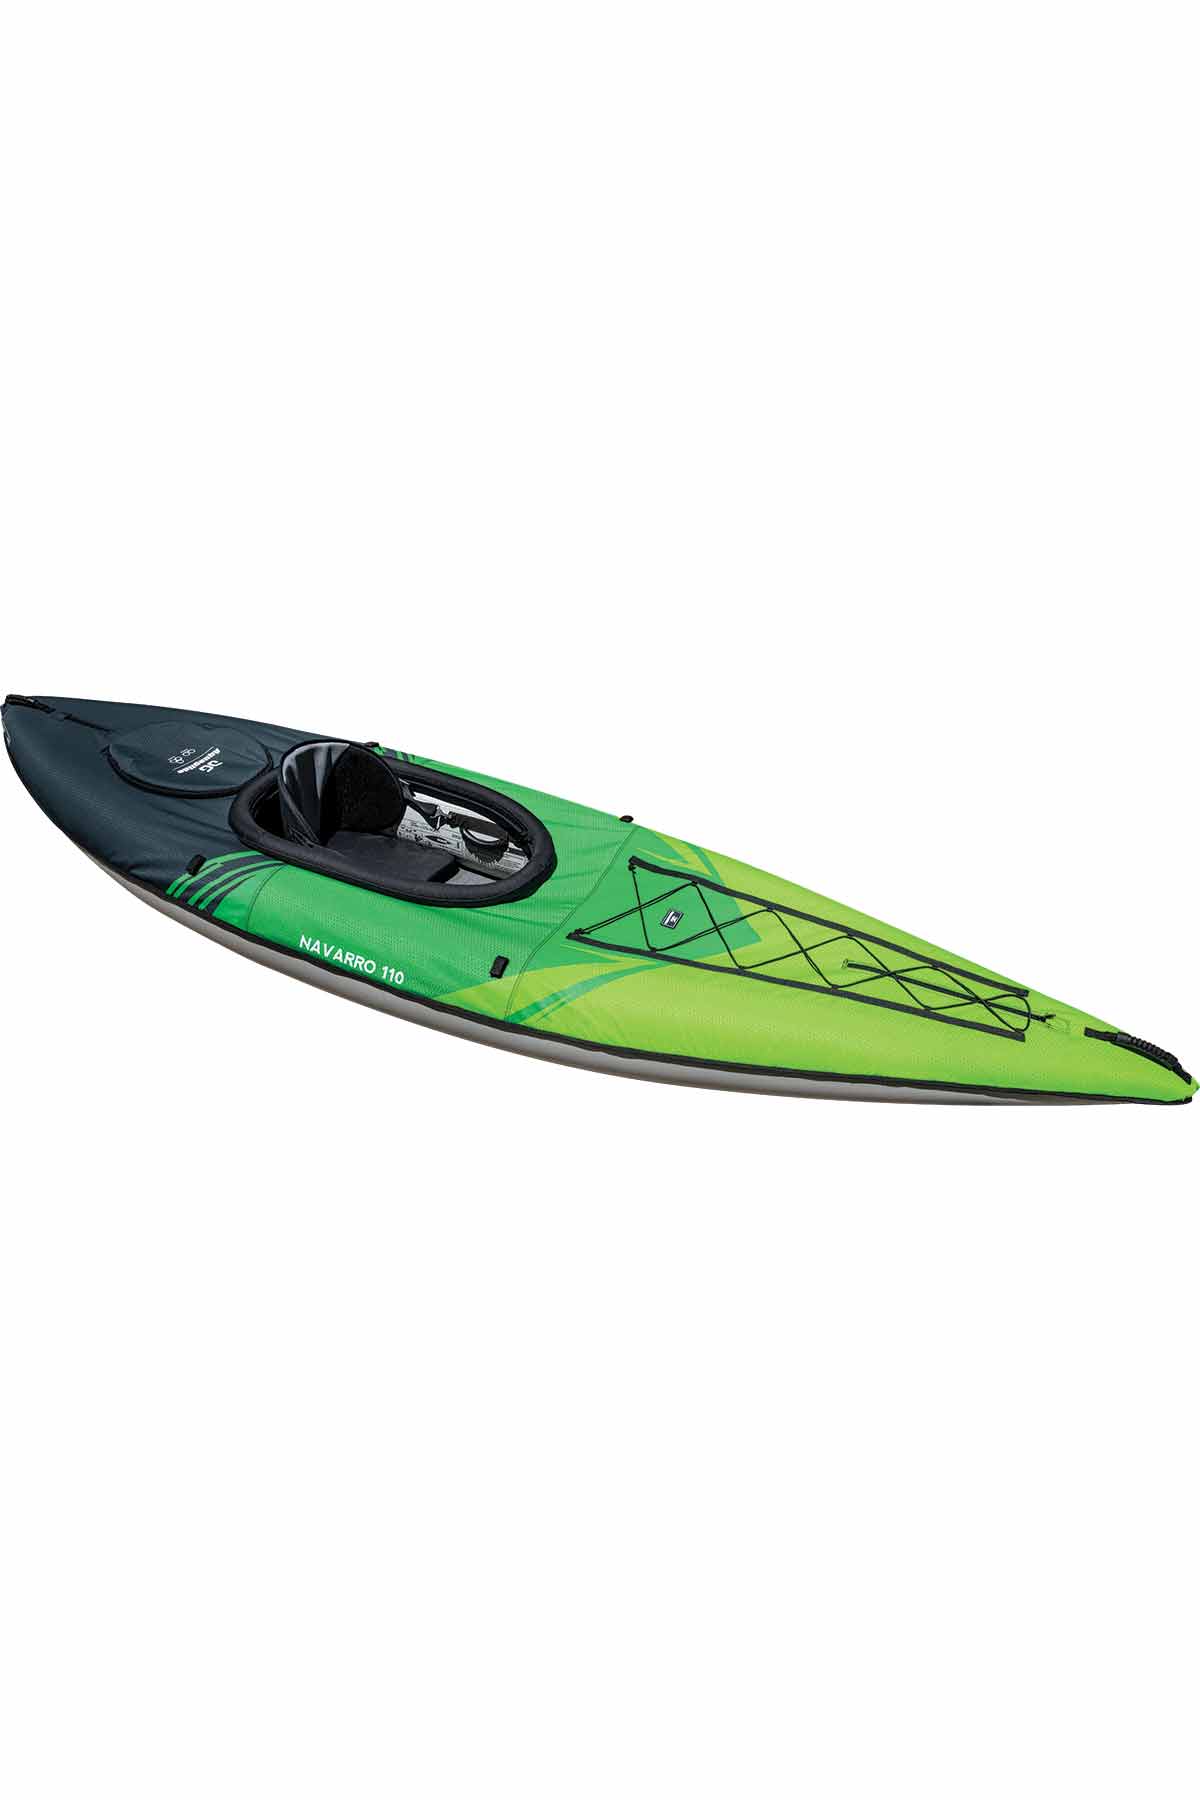 Aquaglide Navarro Inflatable Kayak